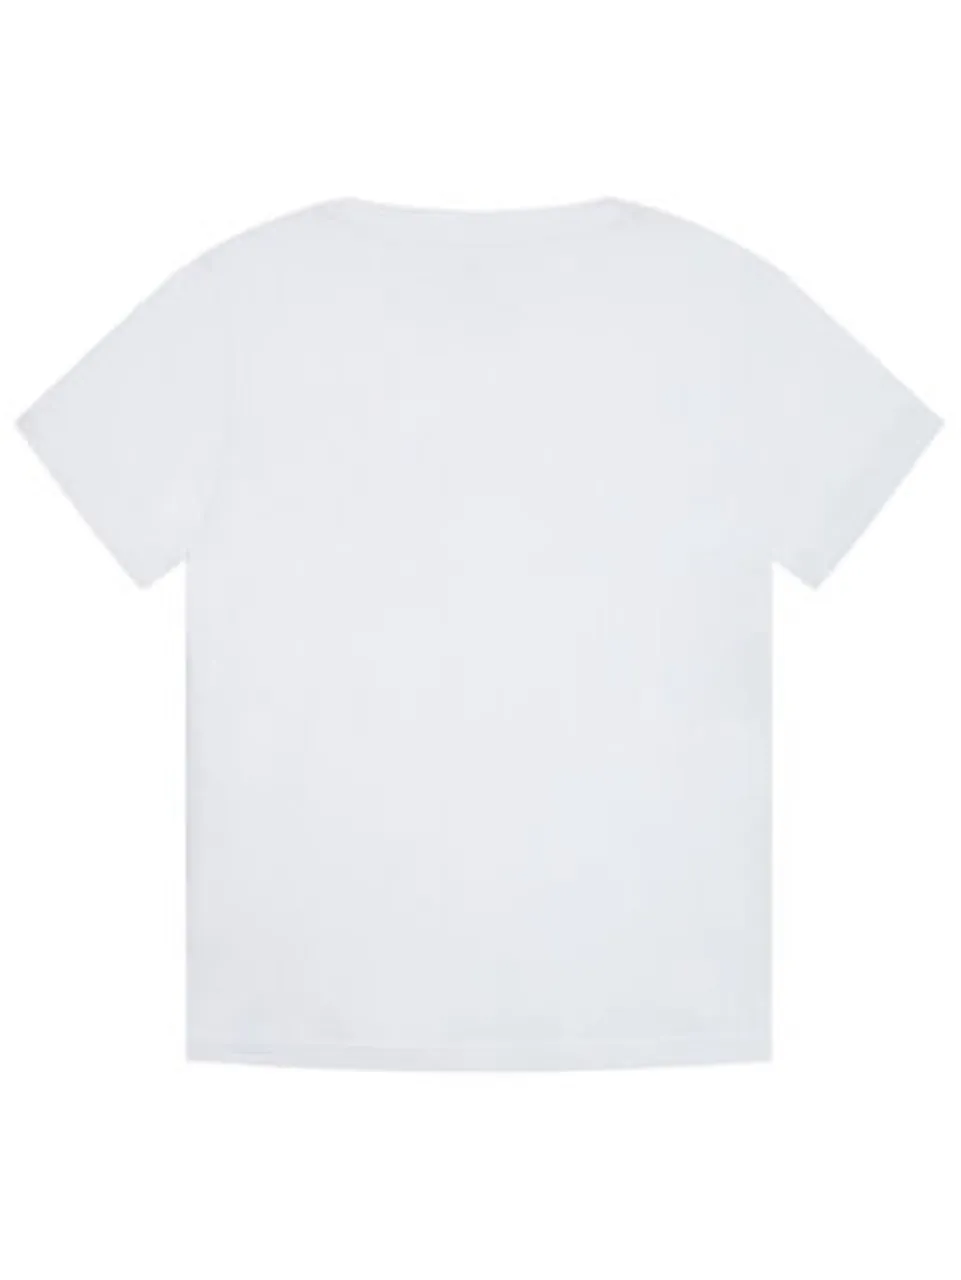 Vans T-Shirt Left Chest VN0A4MQ3 Weiß Classic Fit